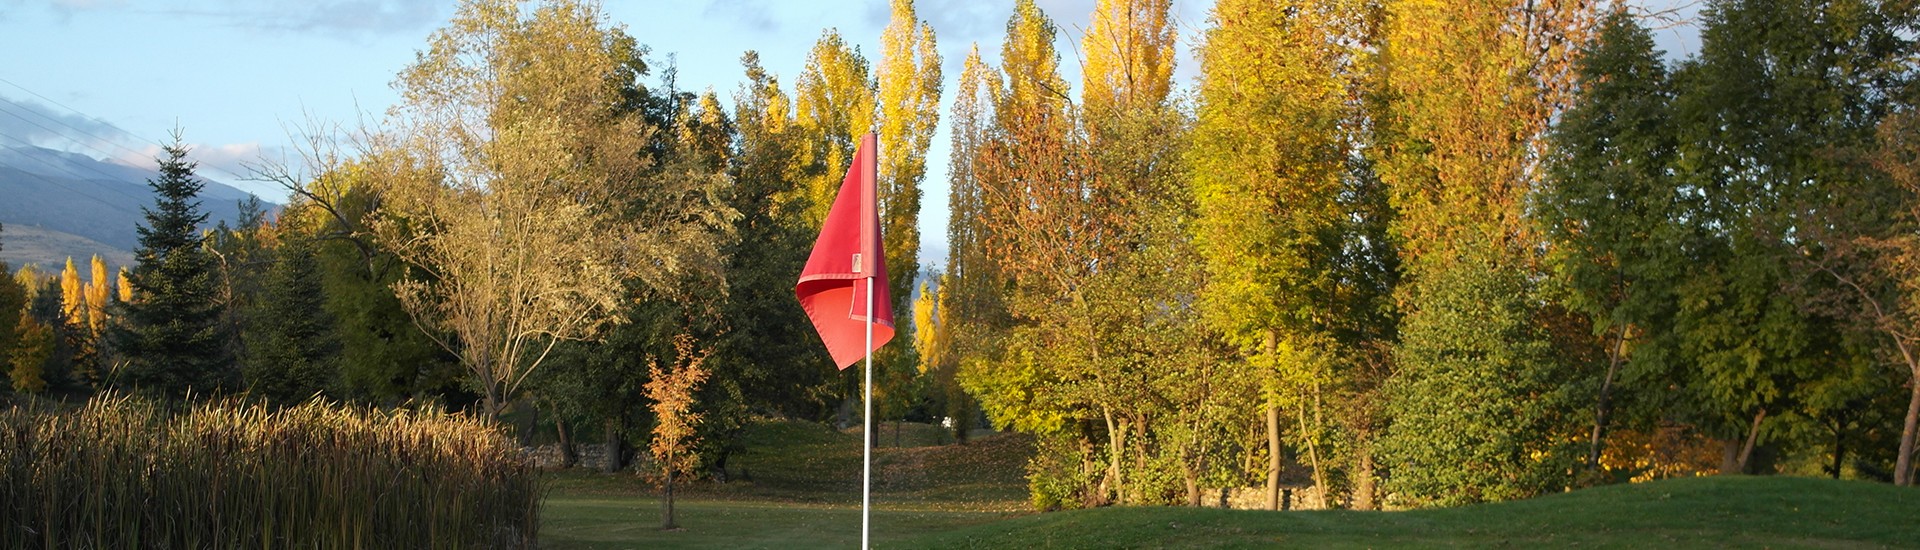 Club de Golf Puigcerdà